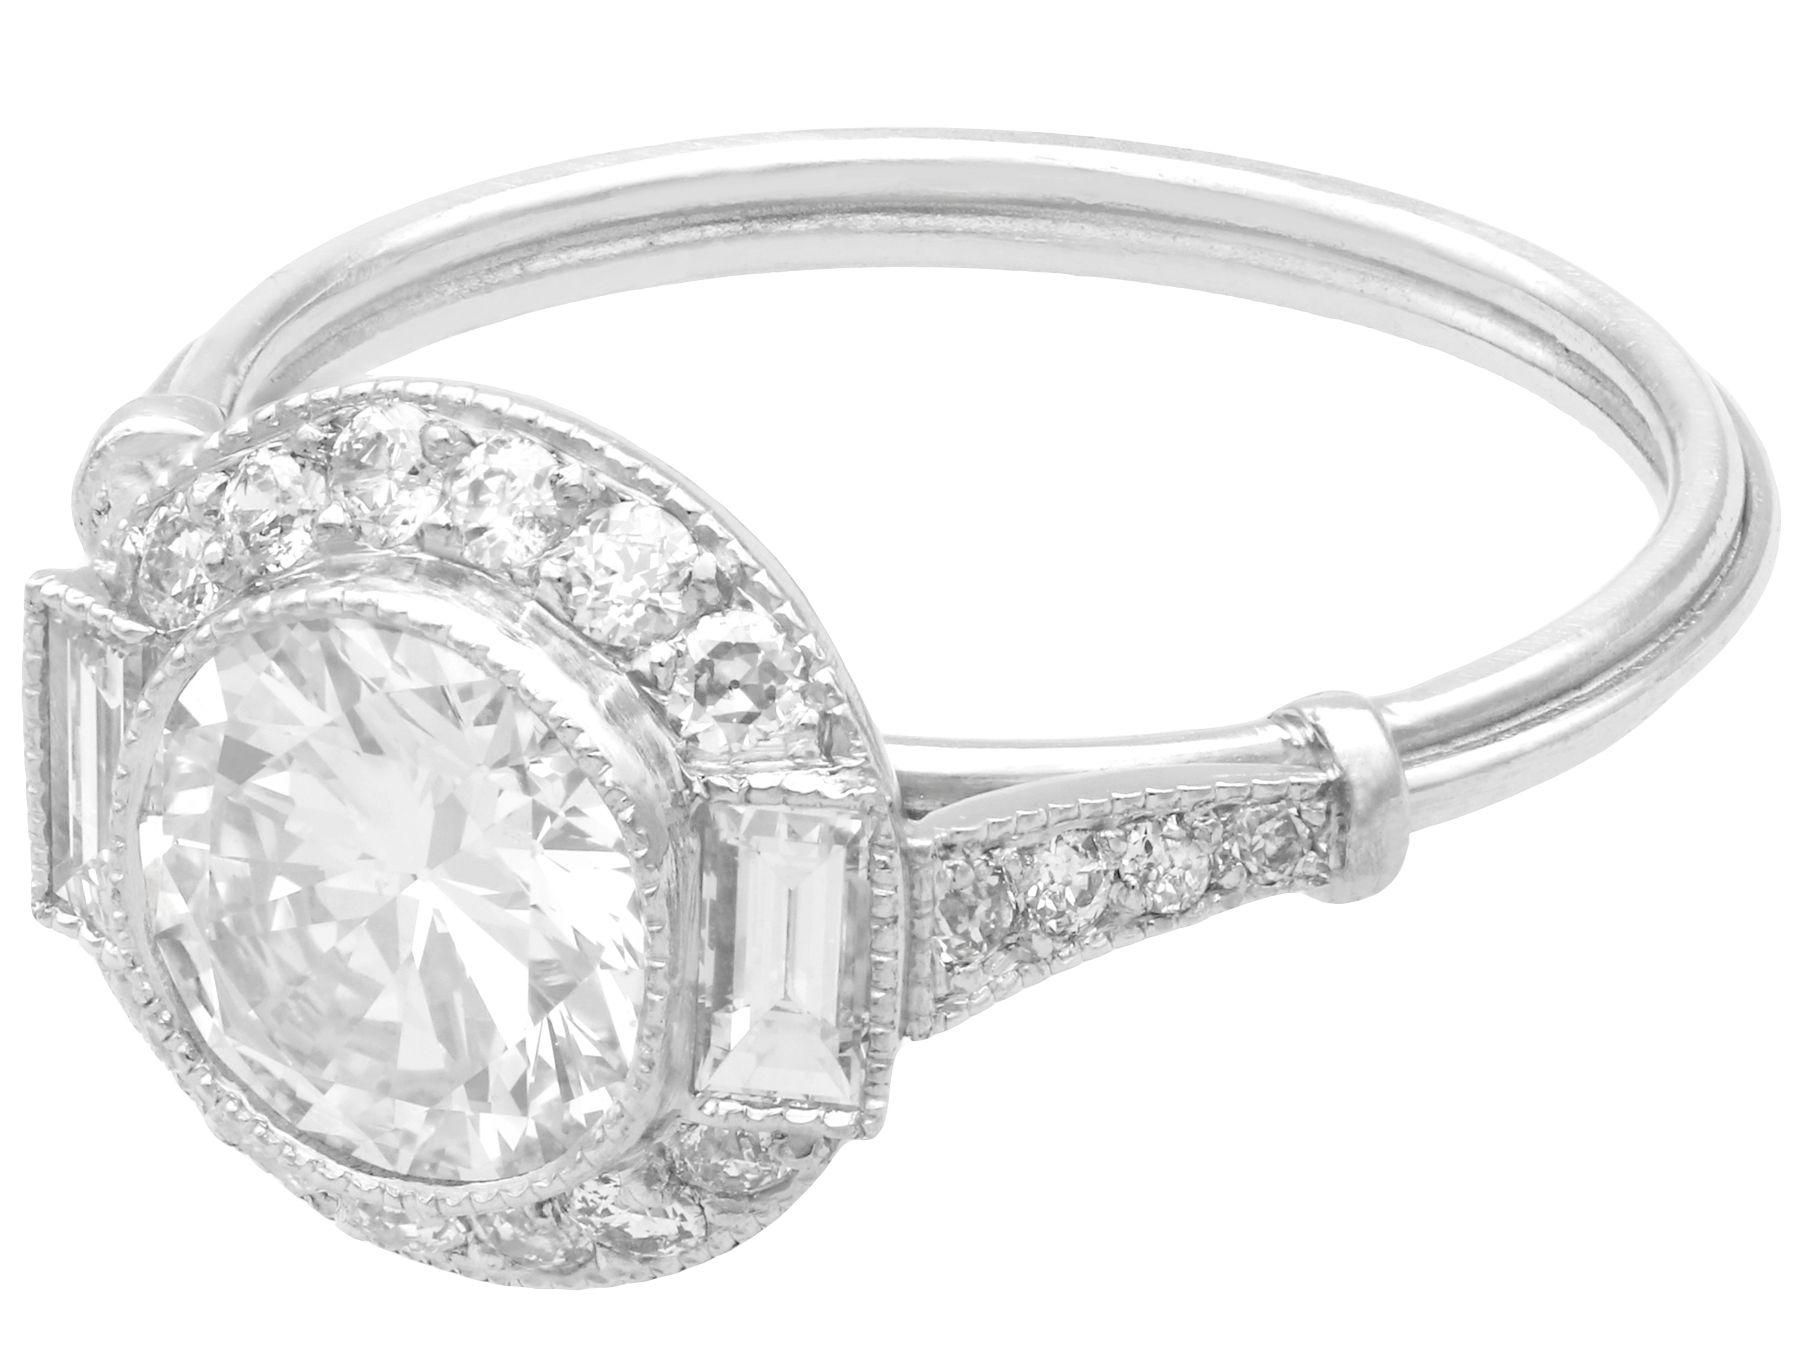 1.82 carat diamond ring